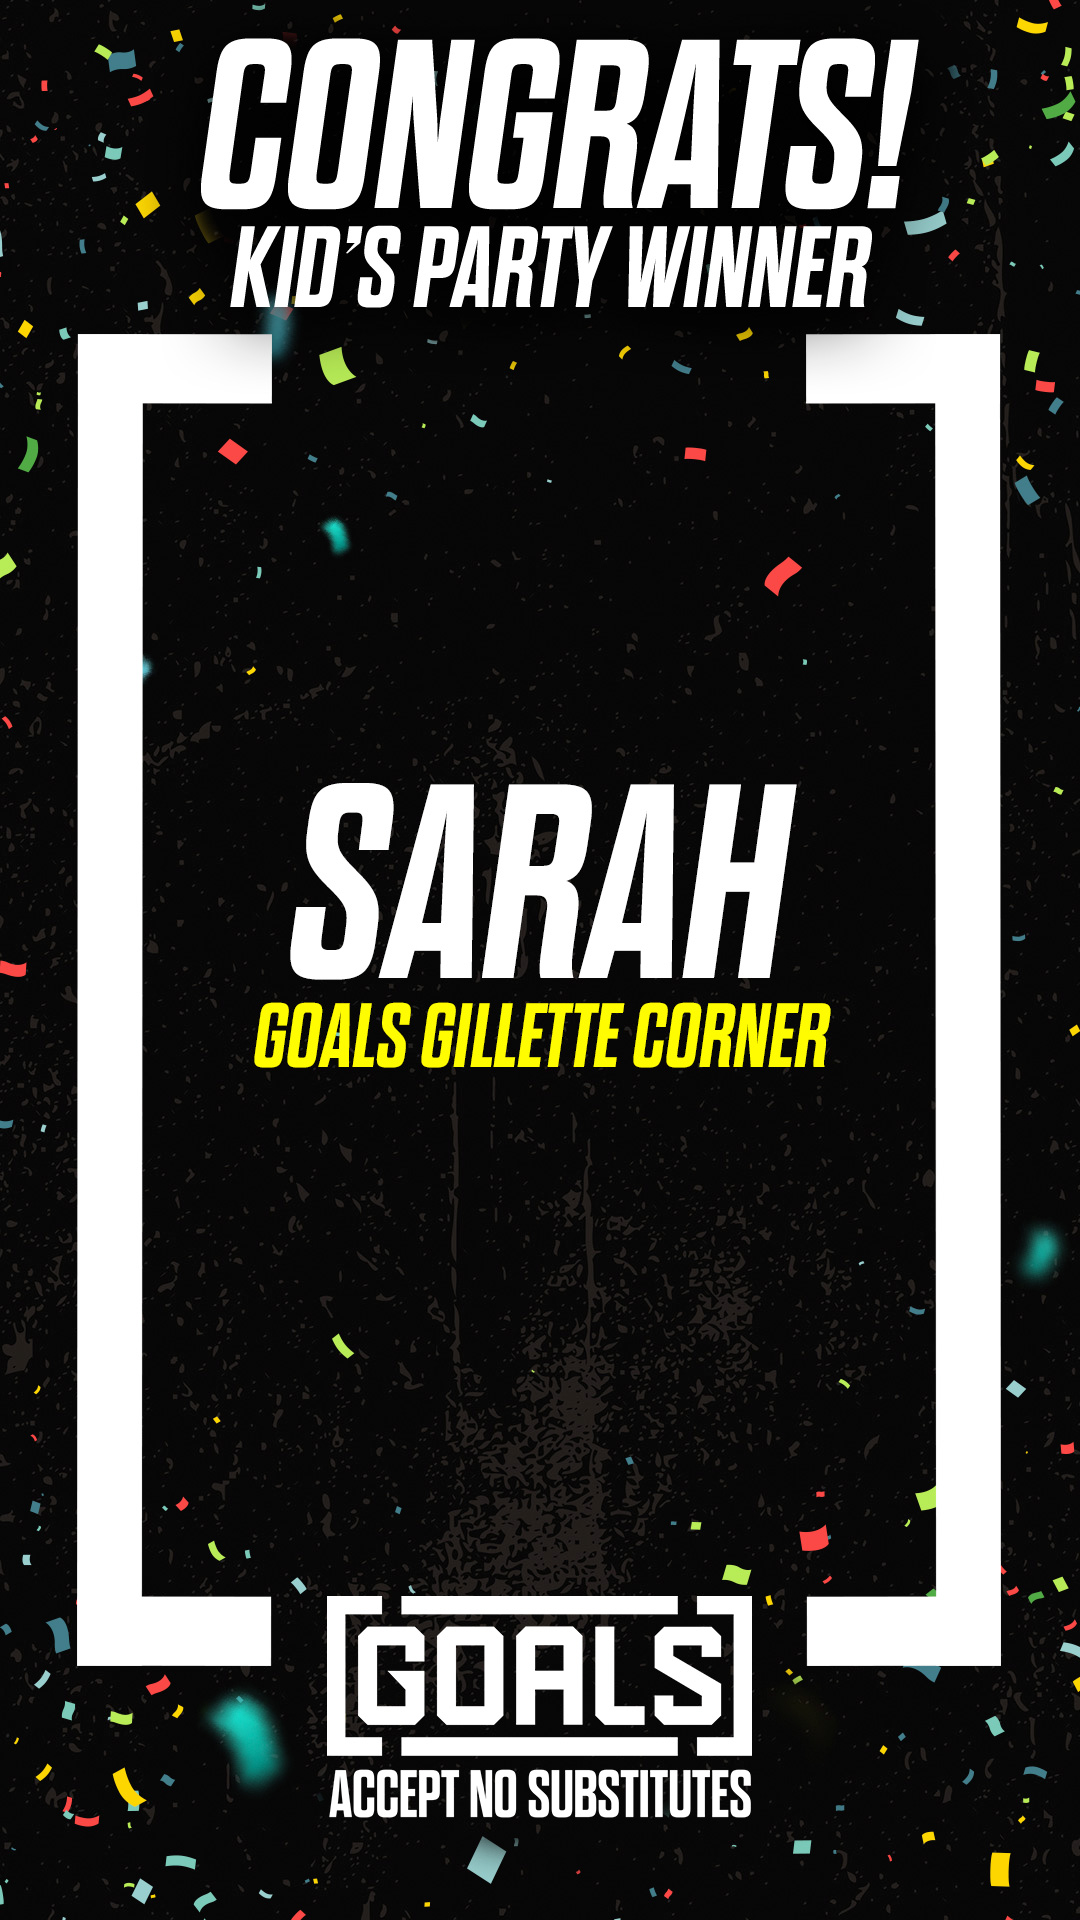 Sarah's A Winner Image